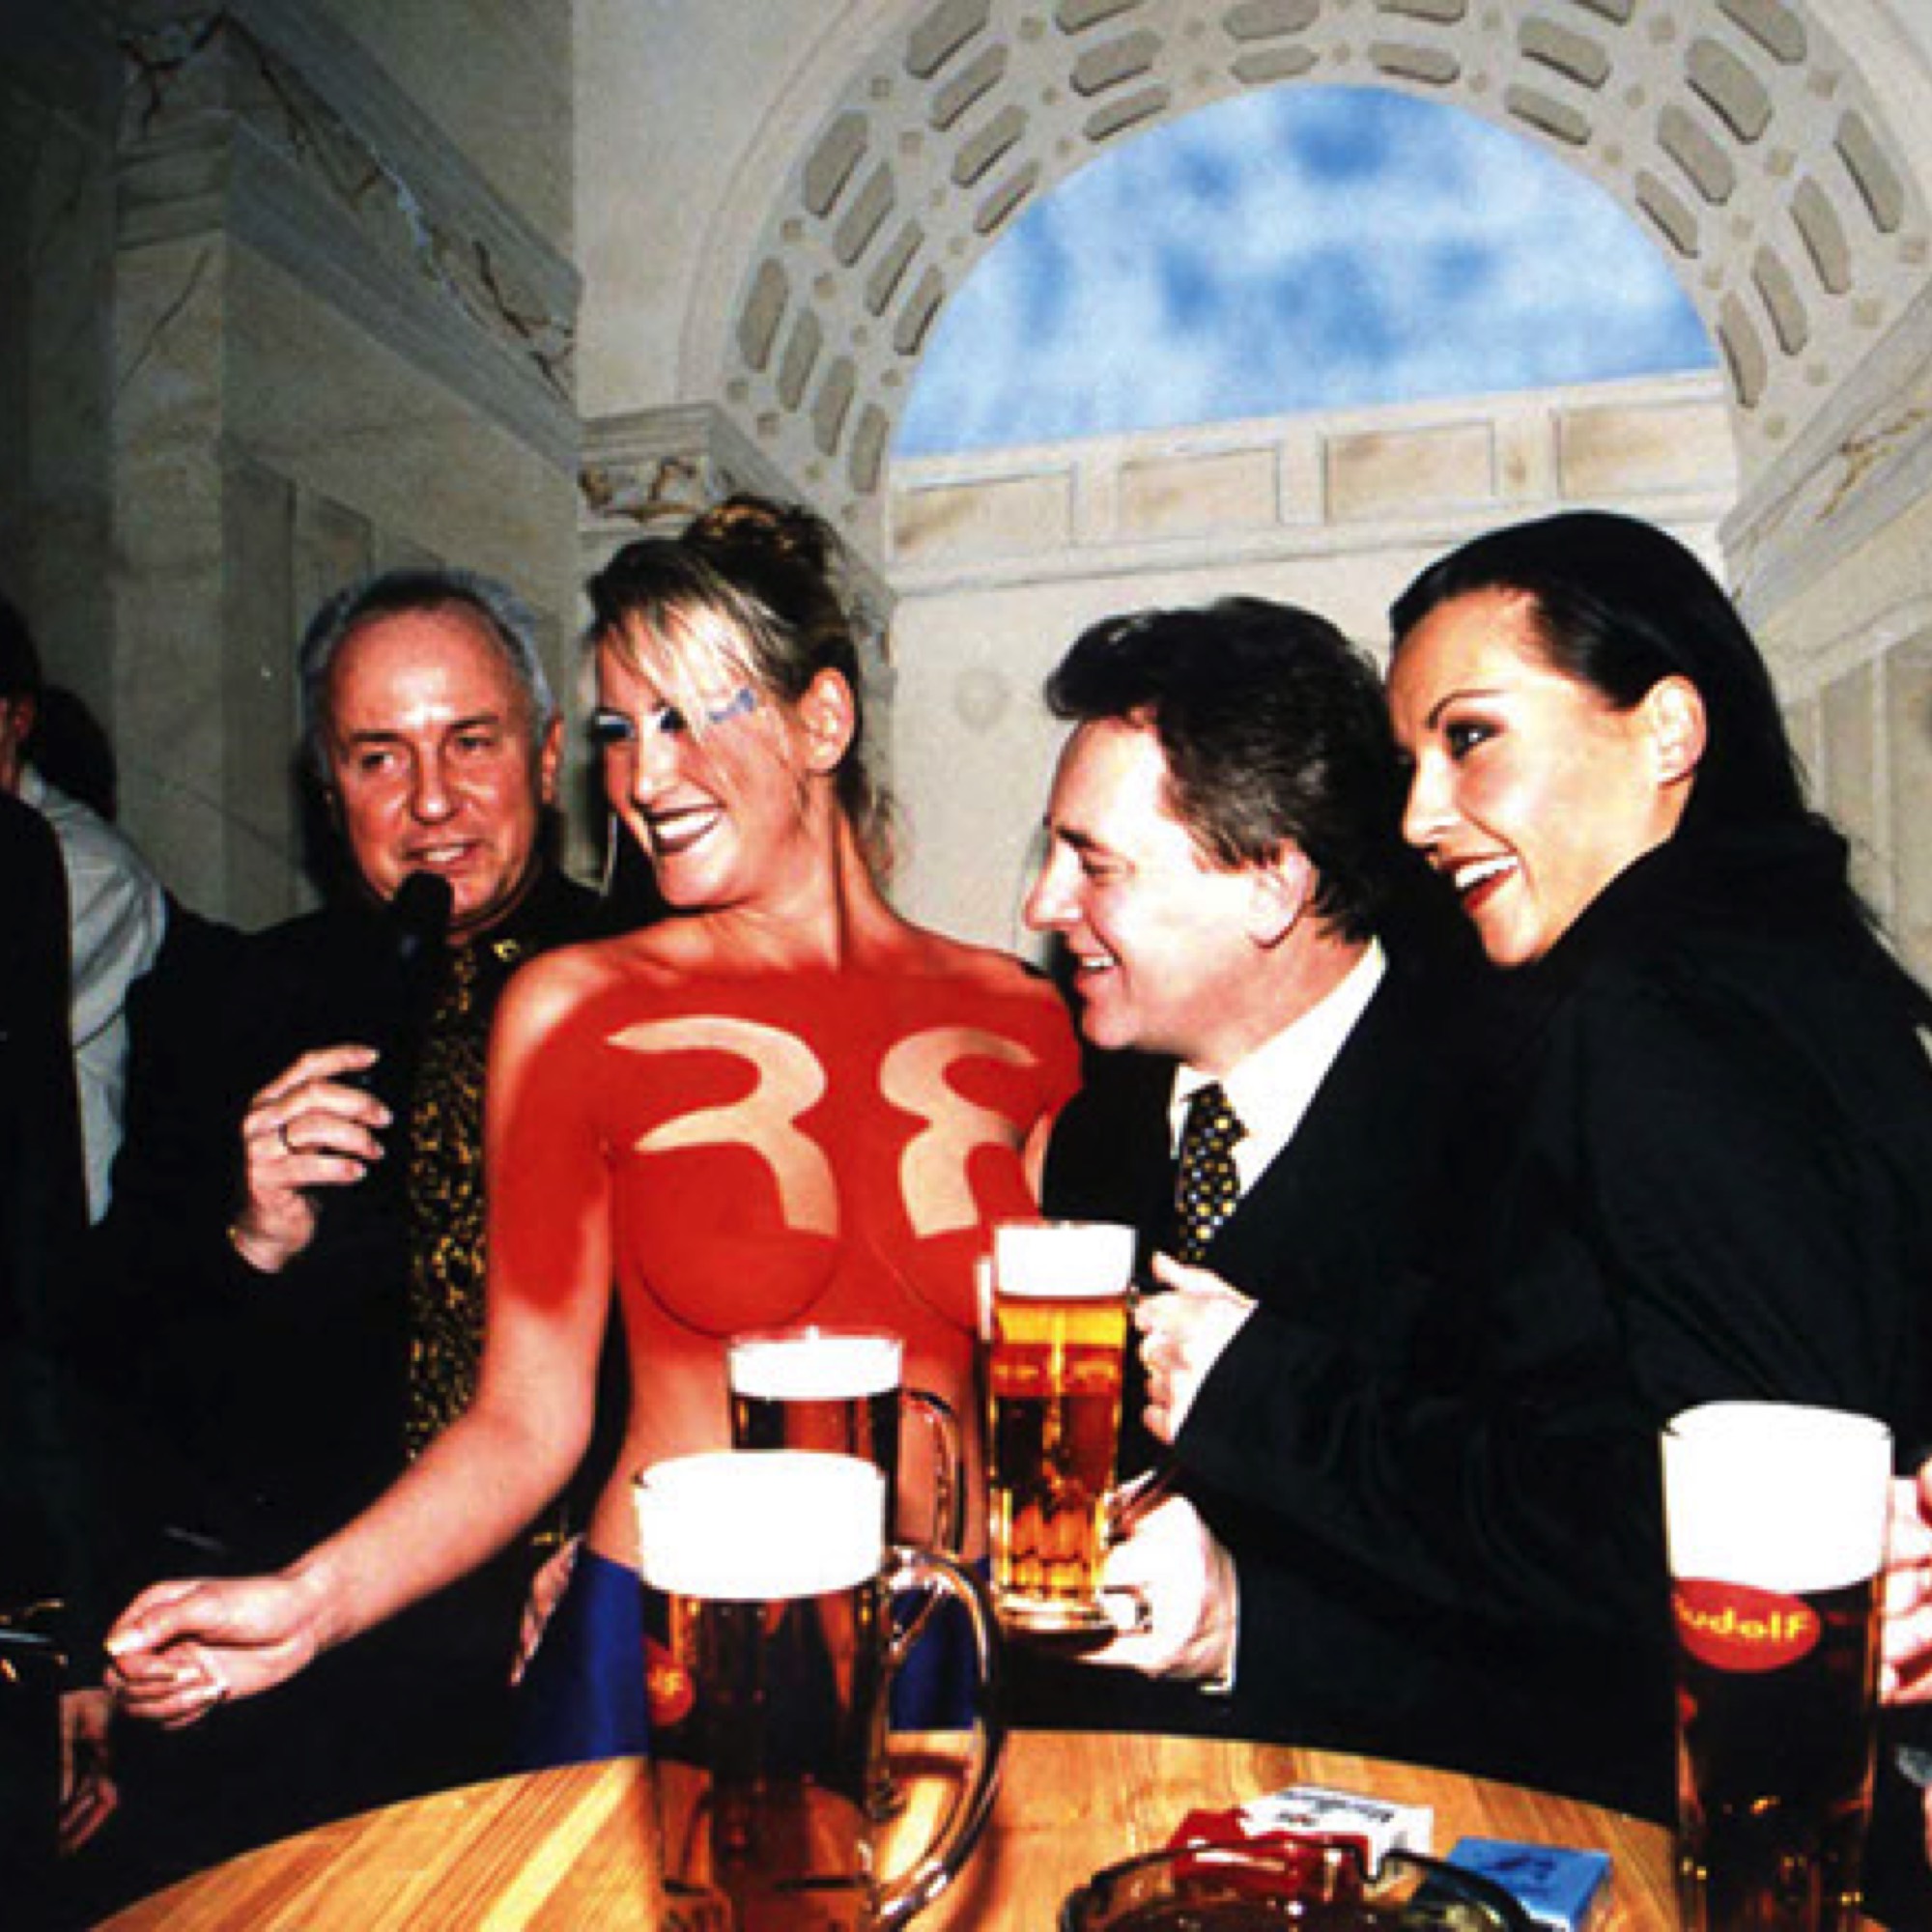 Eröffnung Brauhaus Erlebnisbrauerei Restaurant Rudolf Graz Eggenberg 1999